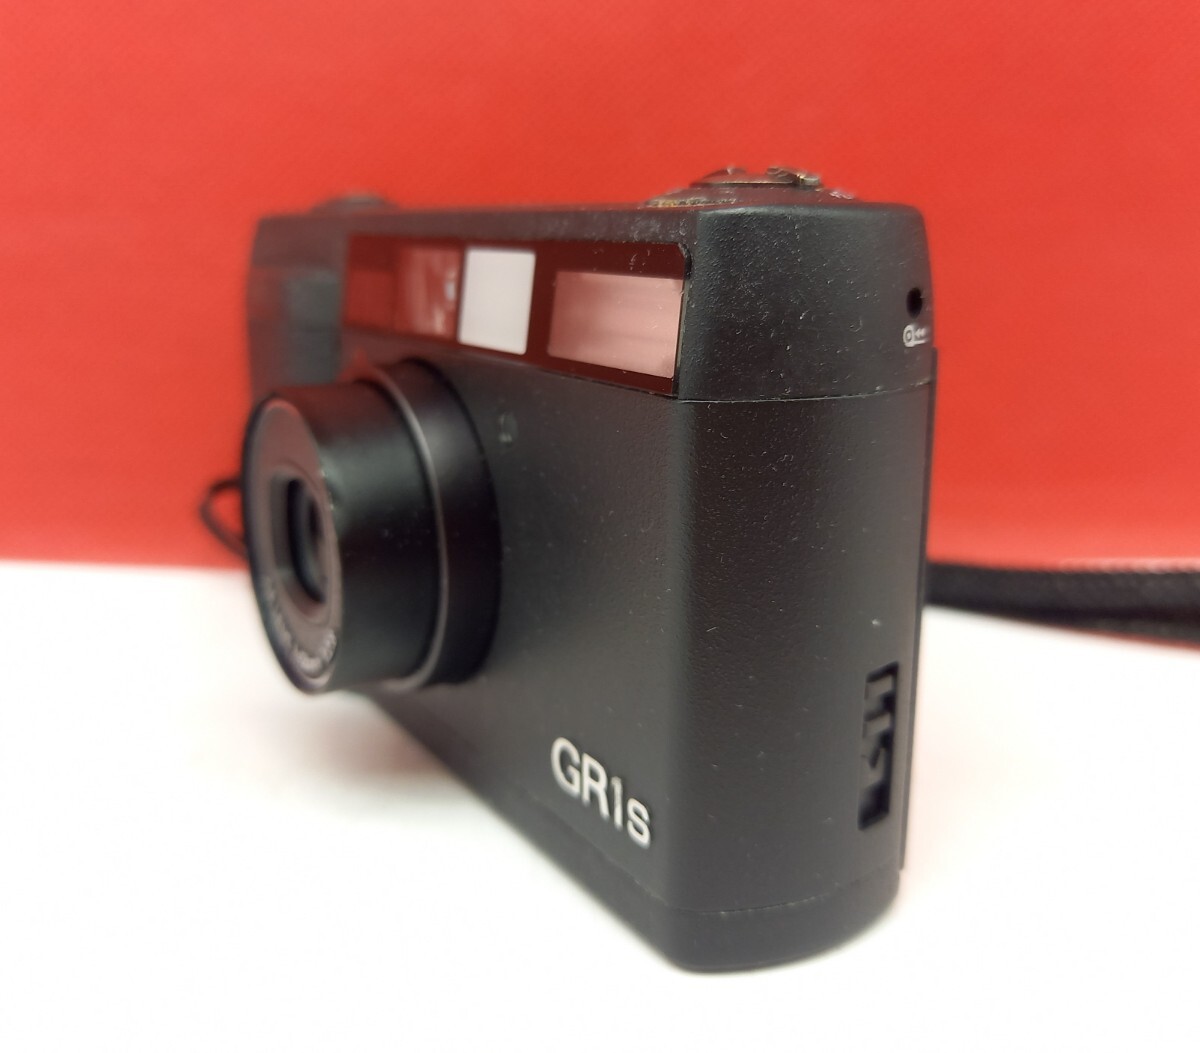 ■ RICOH GR1s コンパクトフィルムカメラ GR LENS 28mm F2.8 動作確認済 シャッター、フラッシュOK リコー_画像2